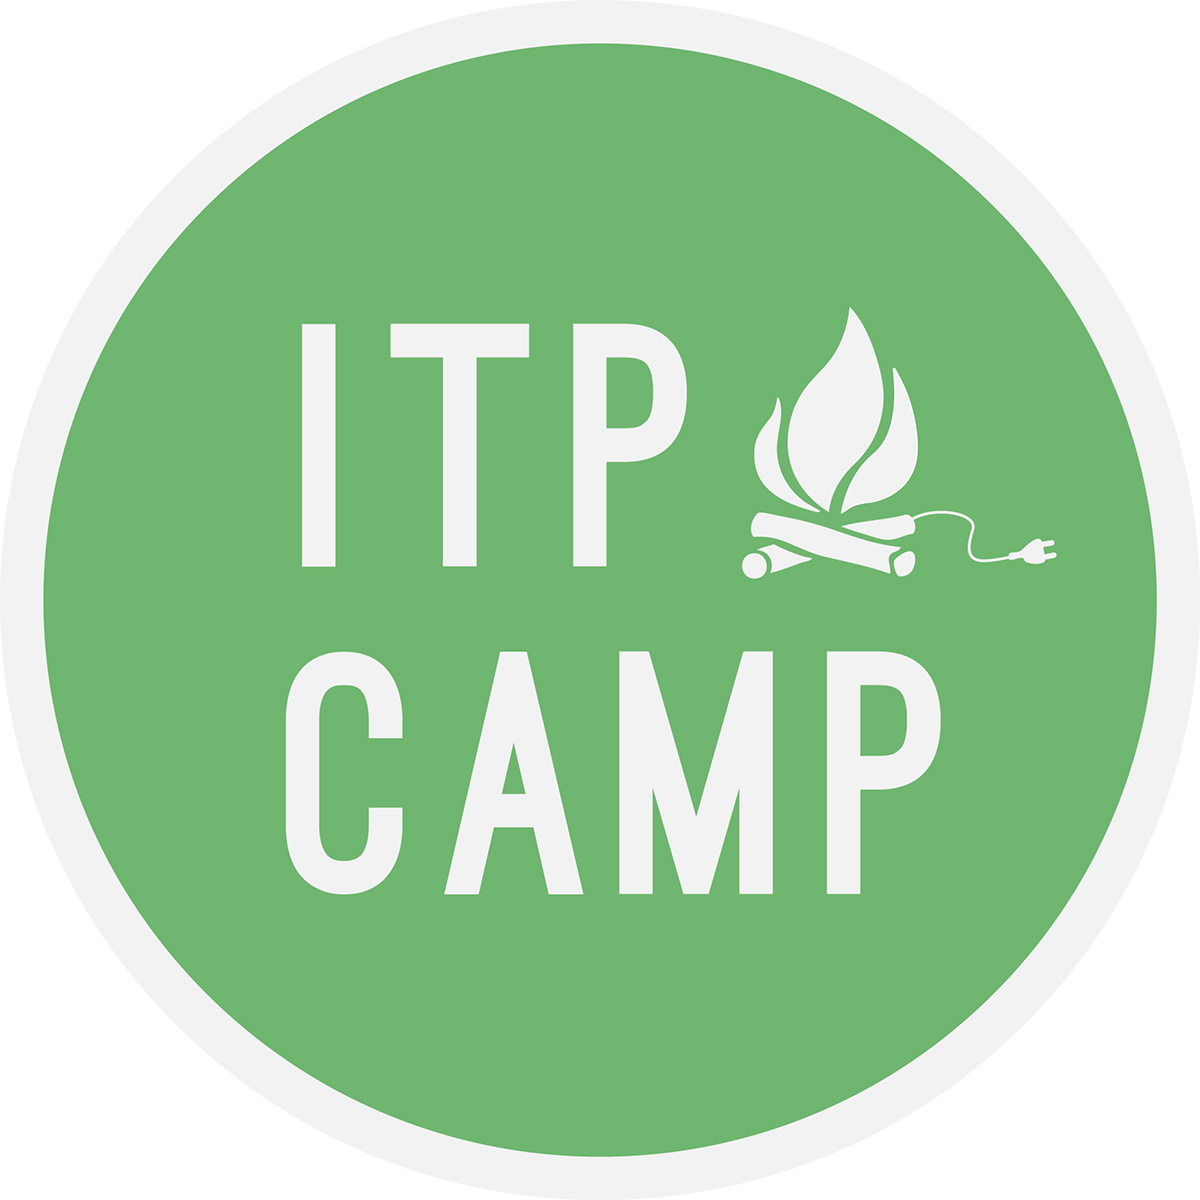 ITP camp logo